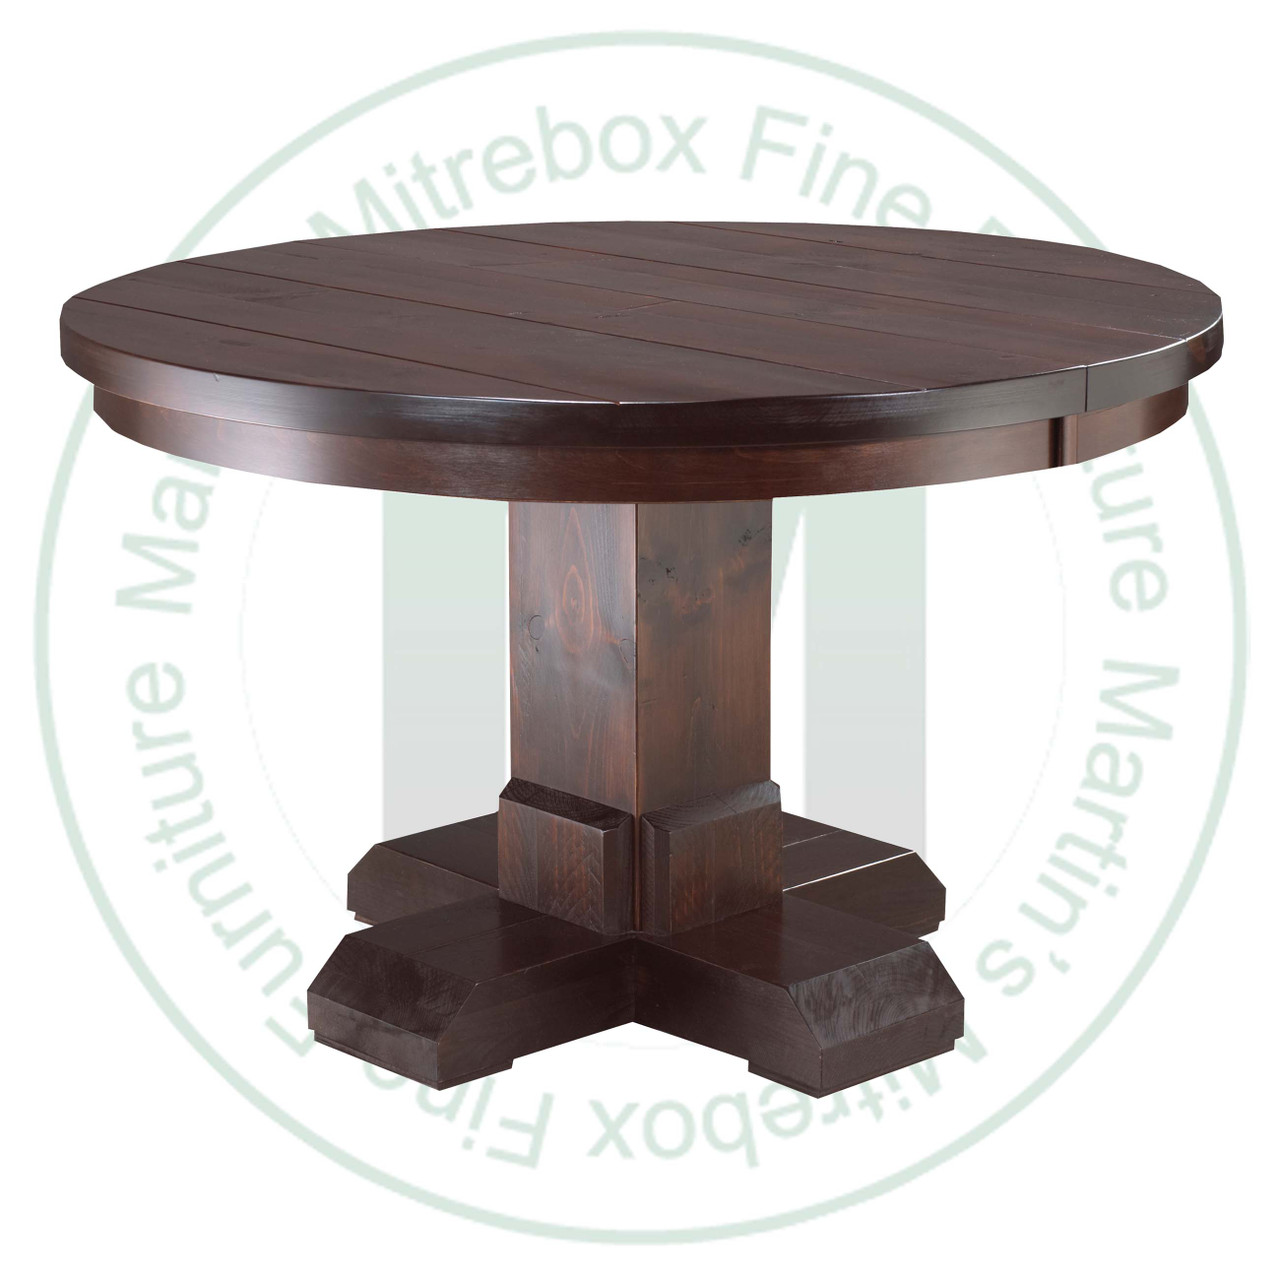 Oak Shrewsbury Single Pedestal Table 60''D x 60''W x 30''H With 2 - 12'' Leaves Table